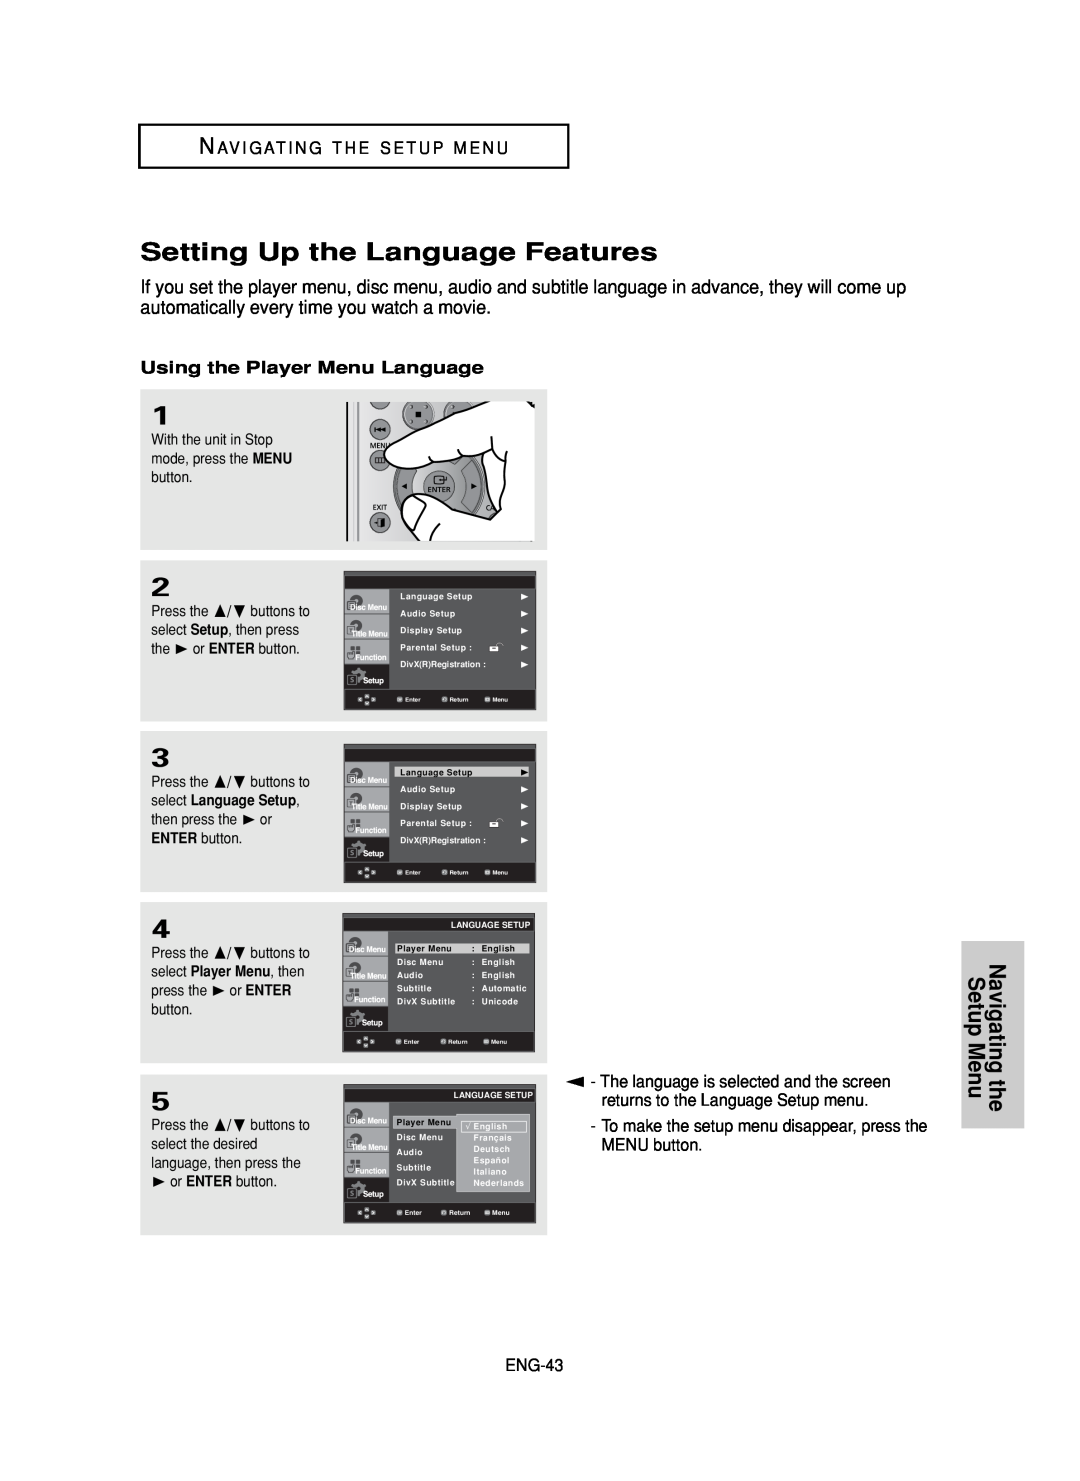 Samsung DVD-F1080 Setting Up the Language Features, Navigating the Setup Menu, N Av I G At I N G T H E S E T U P M E N U 